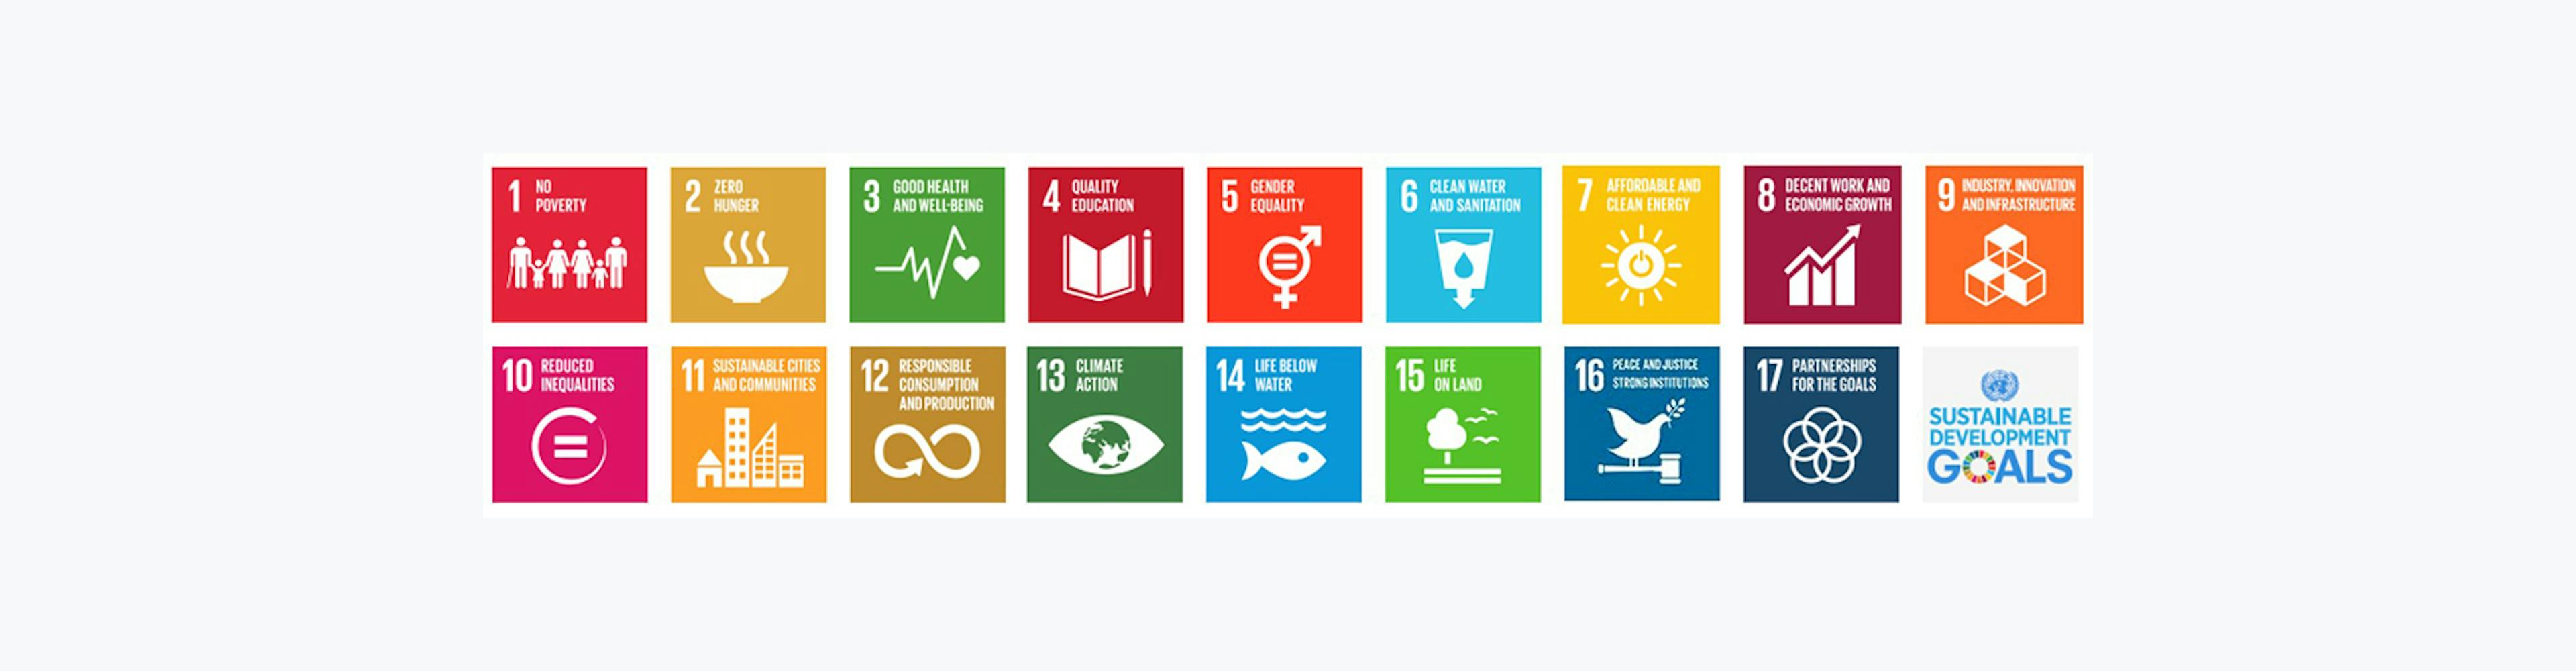 UN Global Agenda 2030